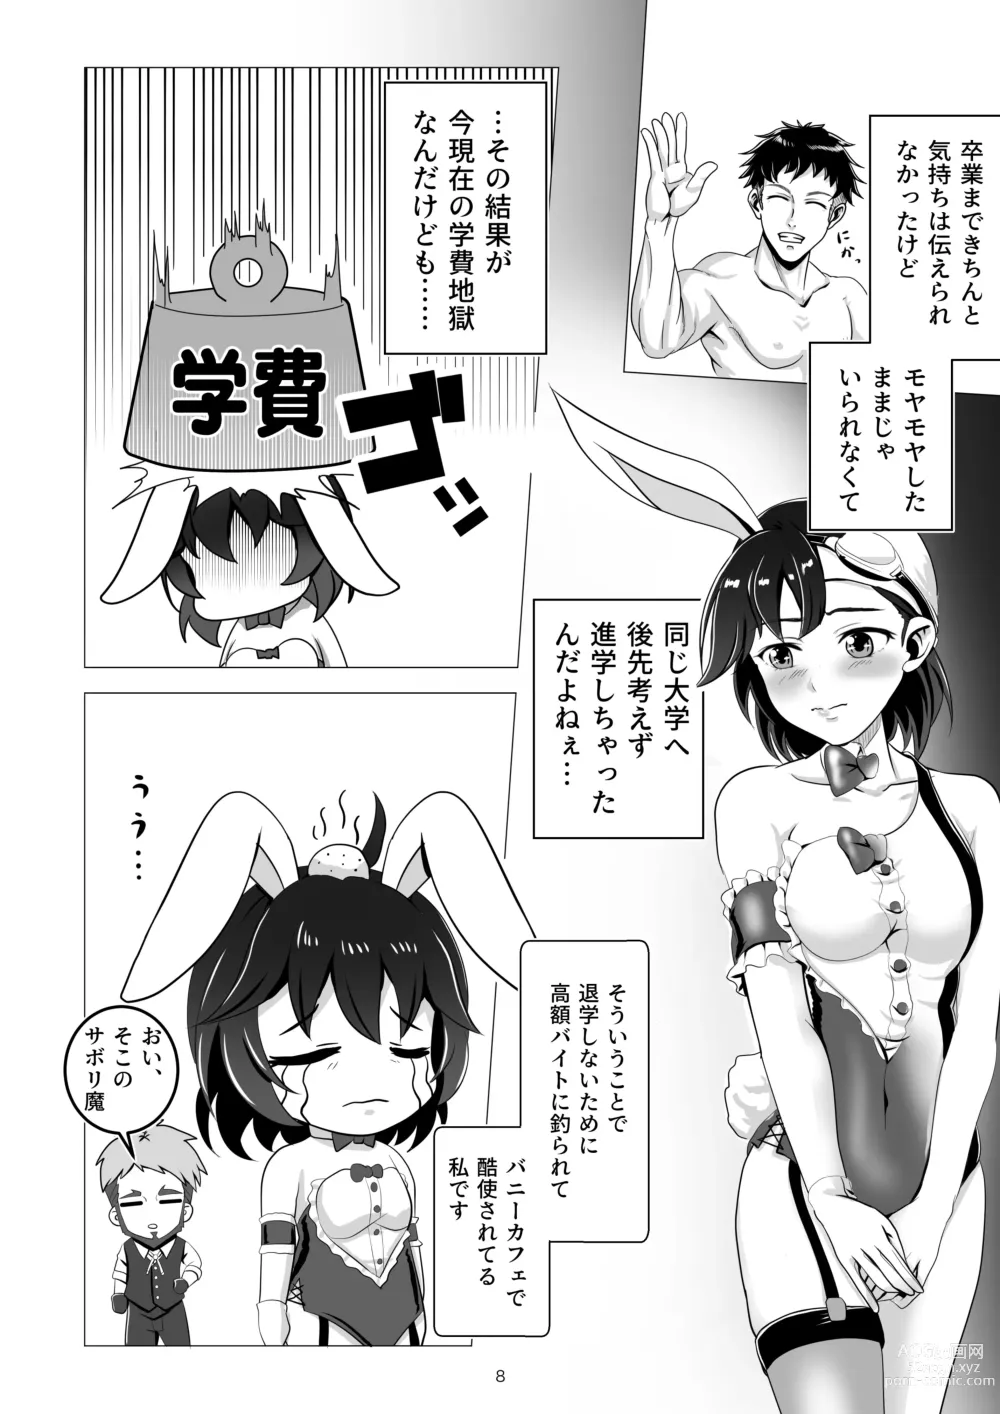 Page 8 of doujinshi Bunny x Baito Party